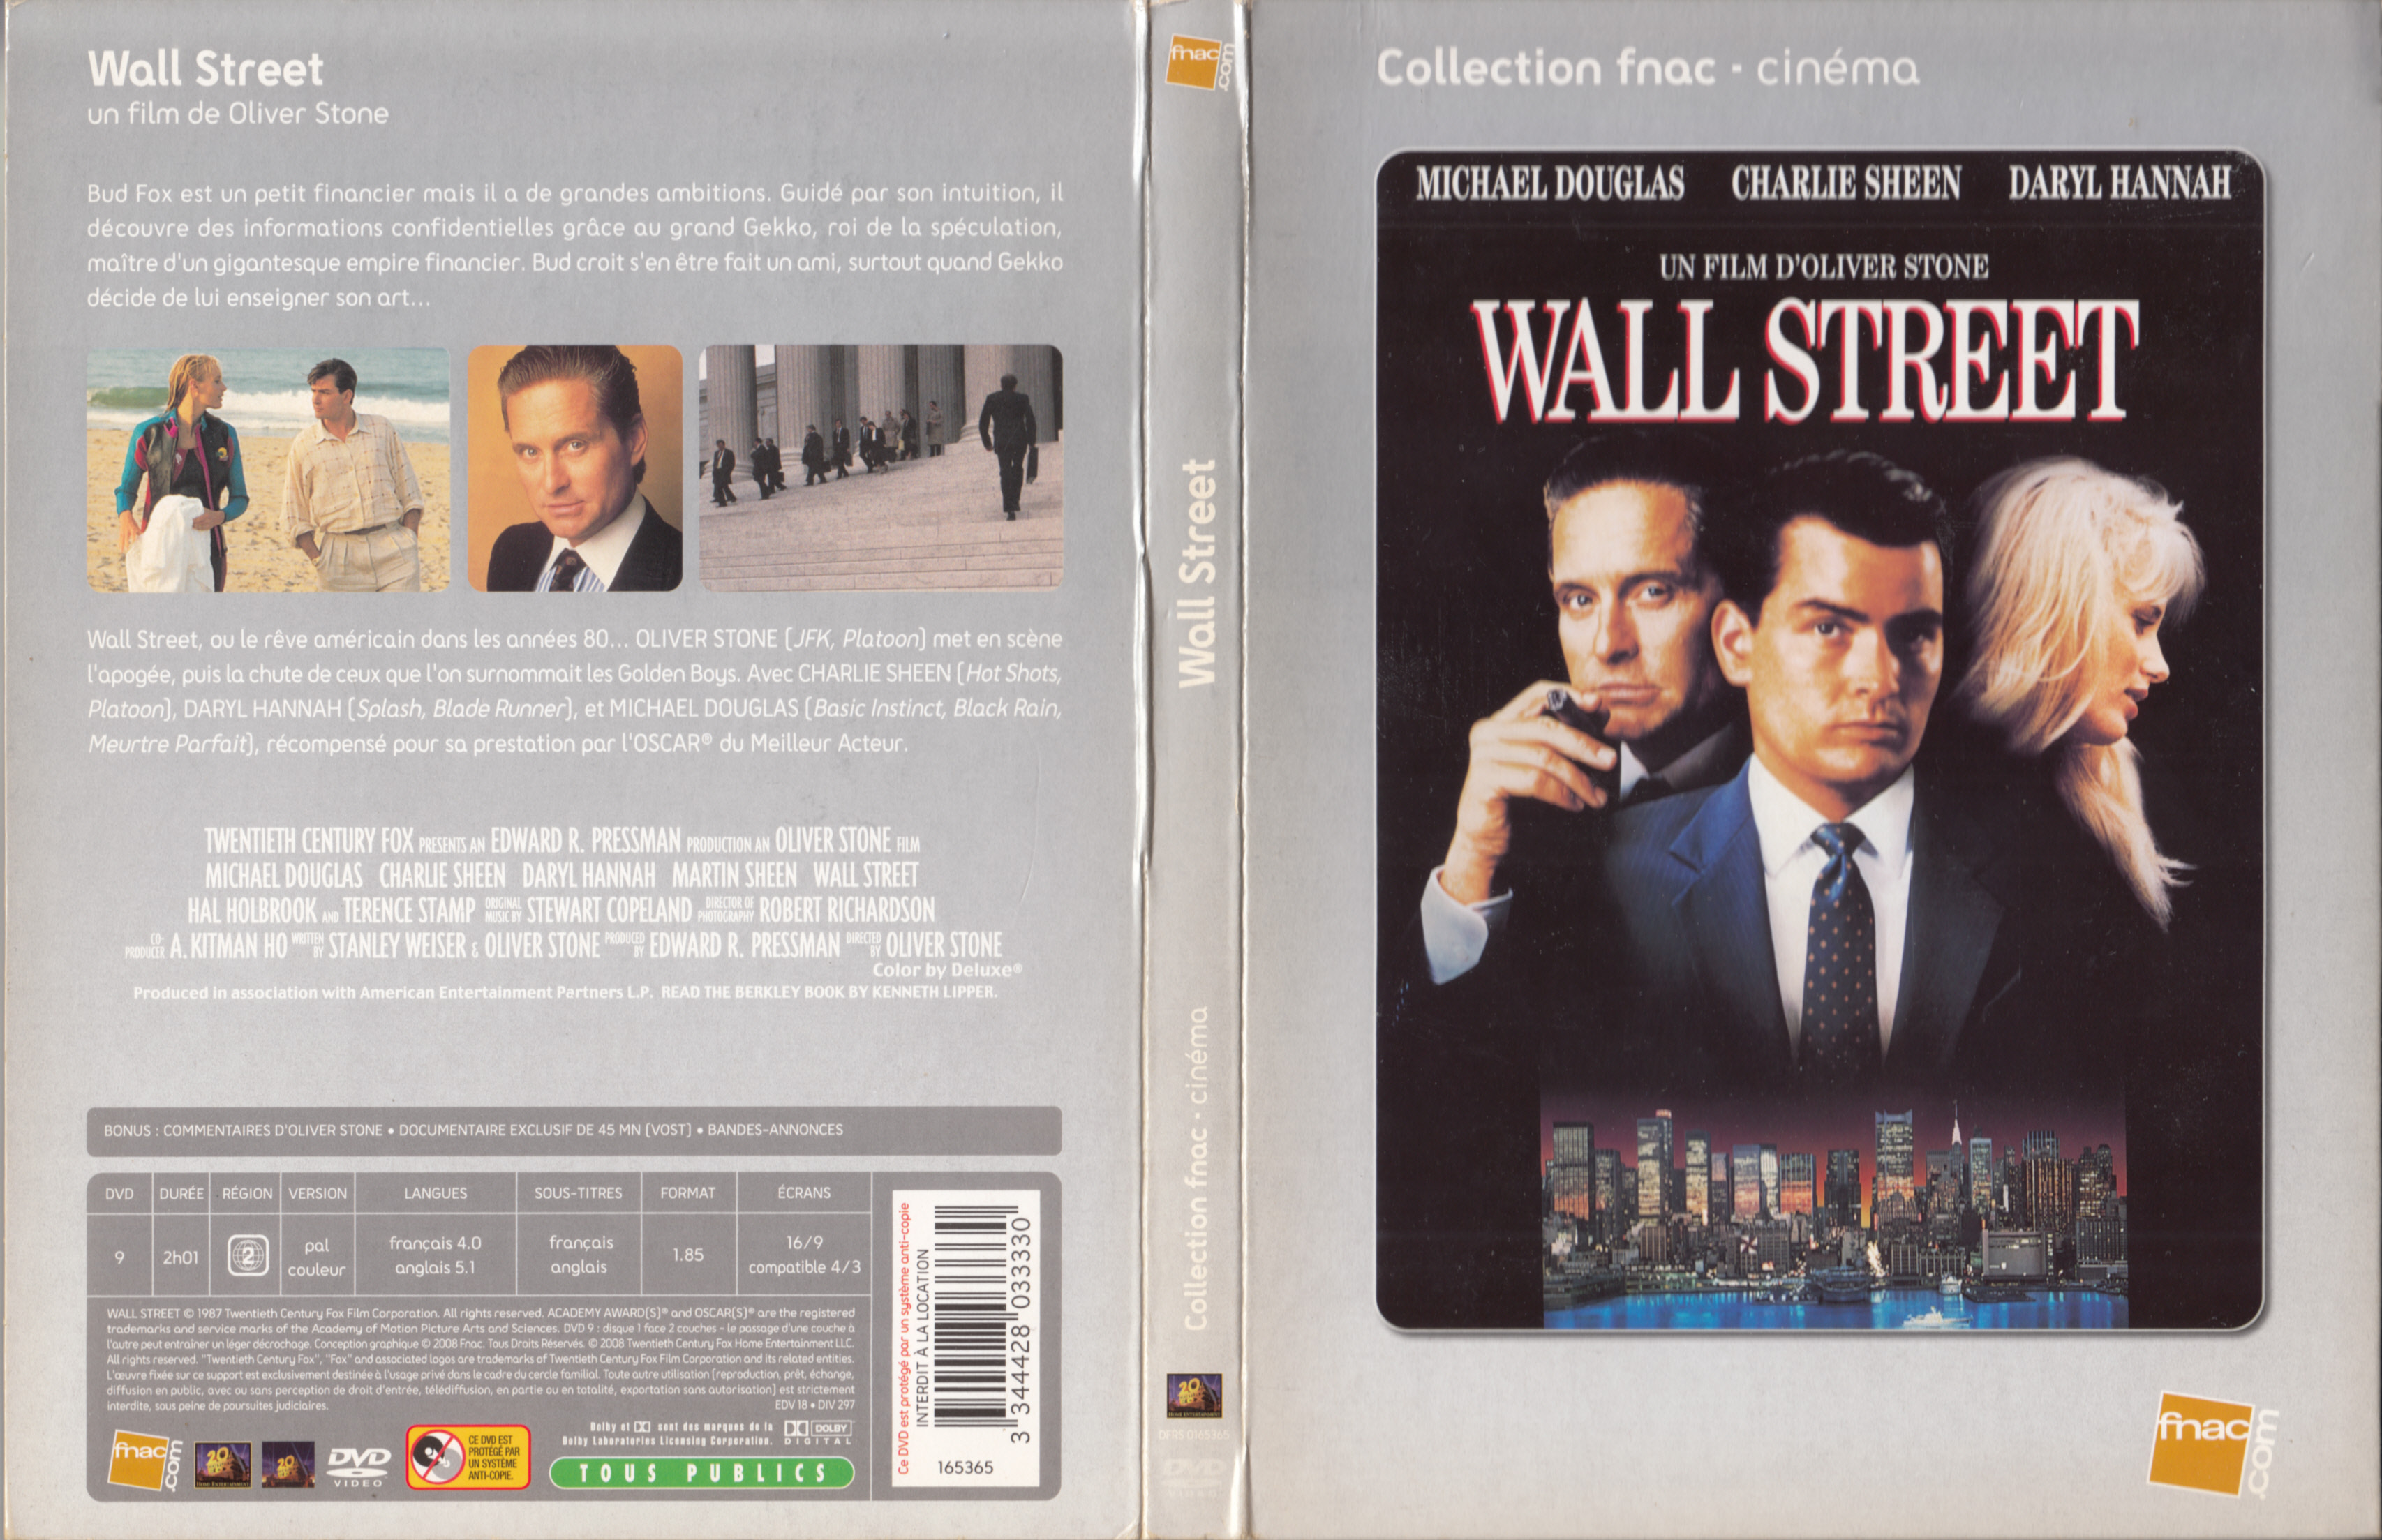 Jaquette DVD Wall Street v3